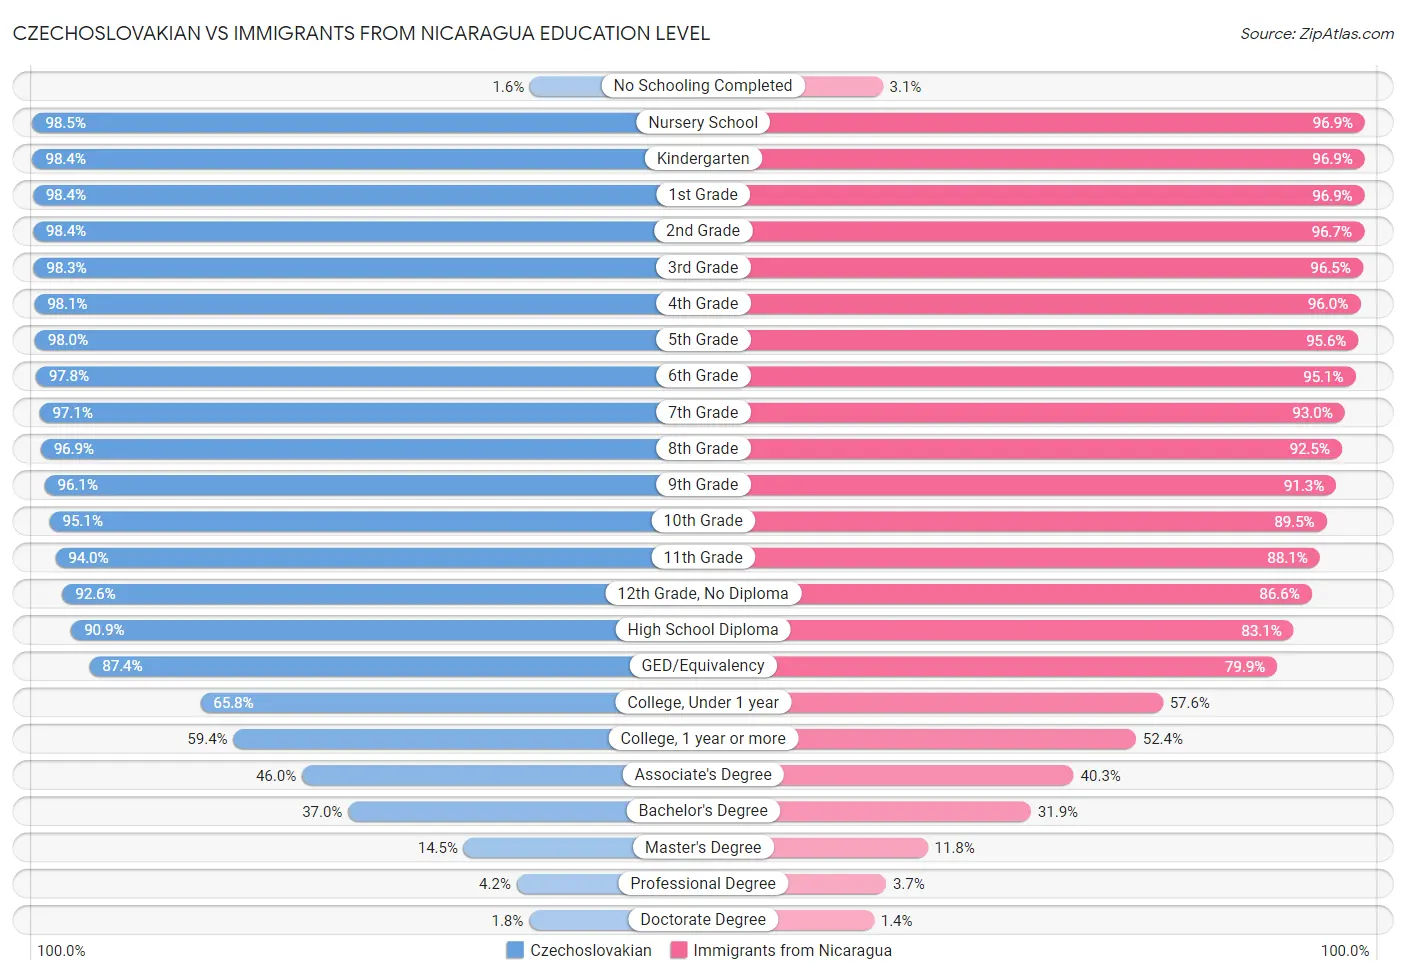 Czechoslovakian vs Immigrants from Nicaragua Education Level